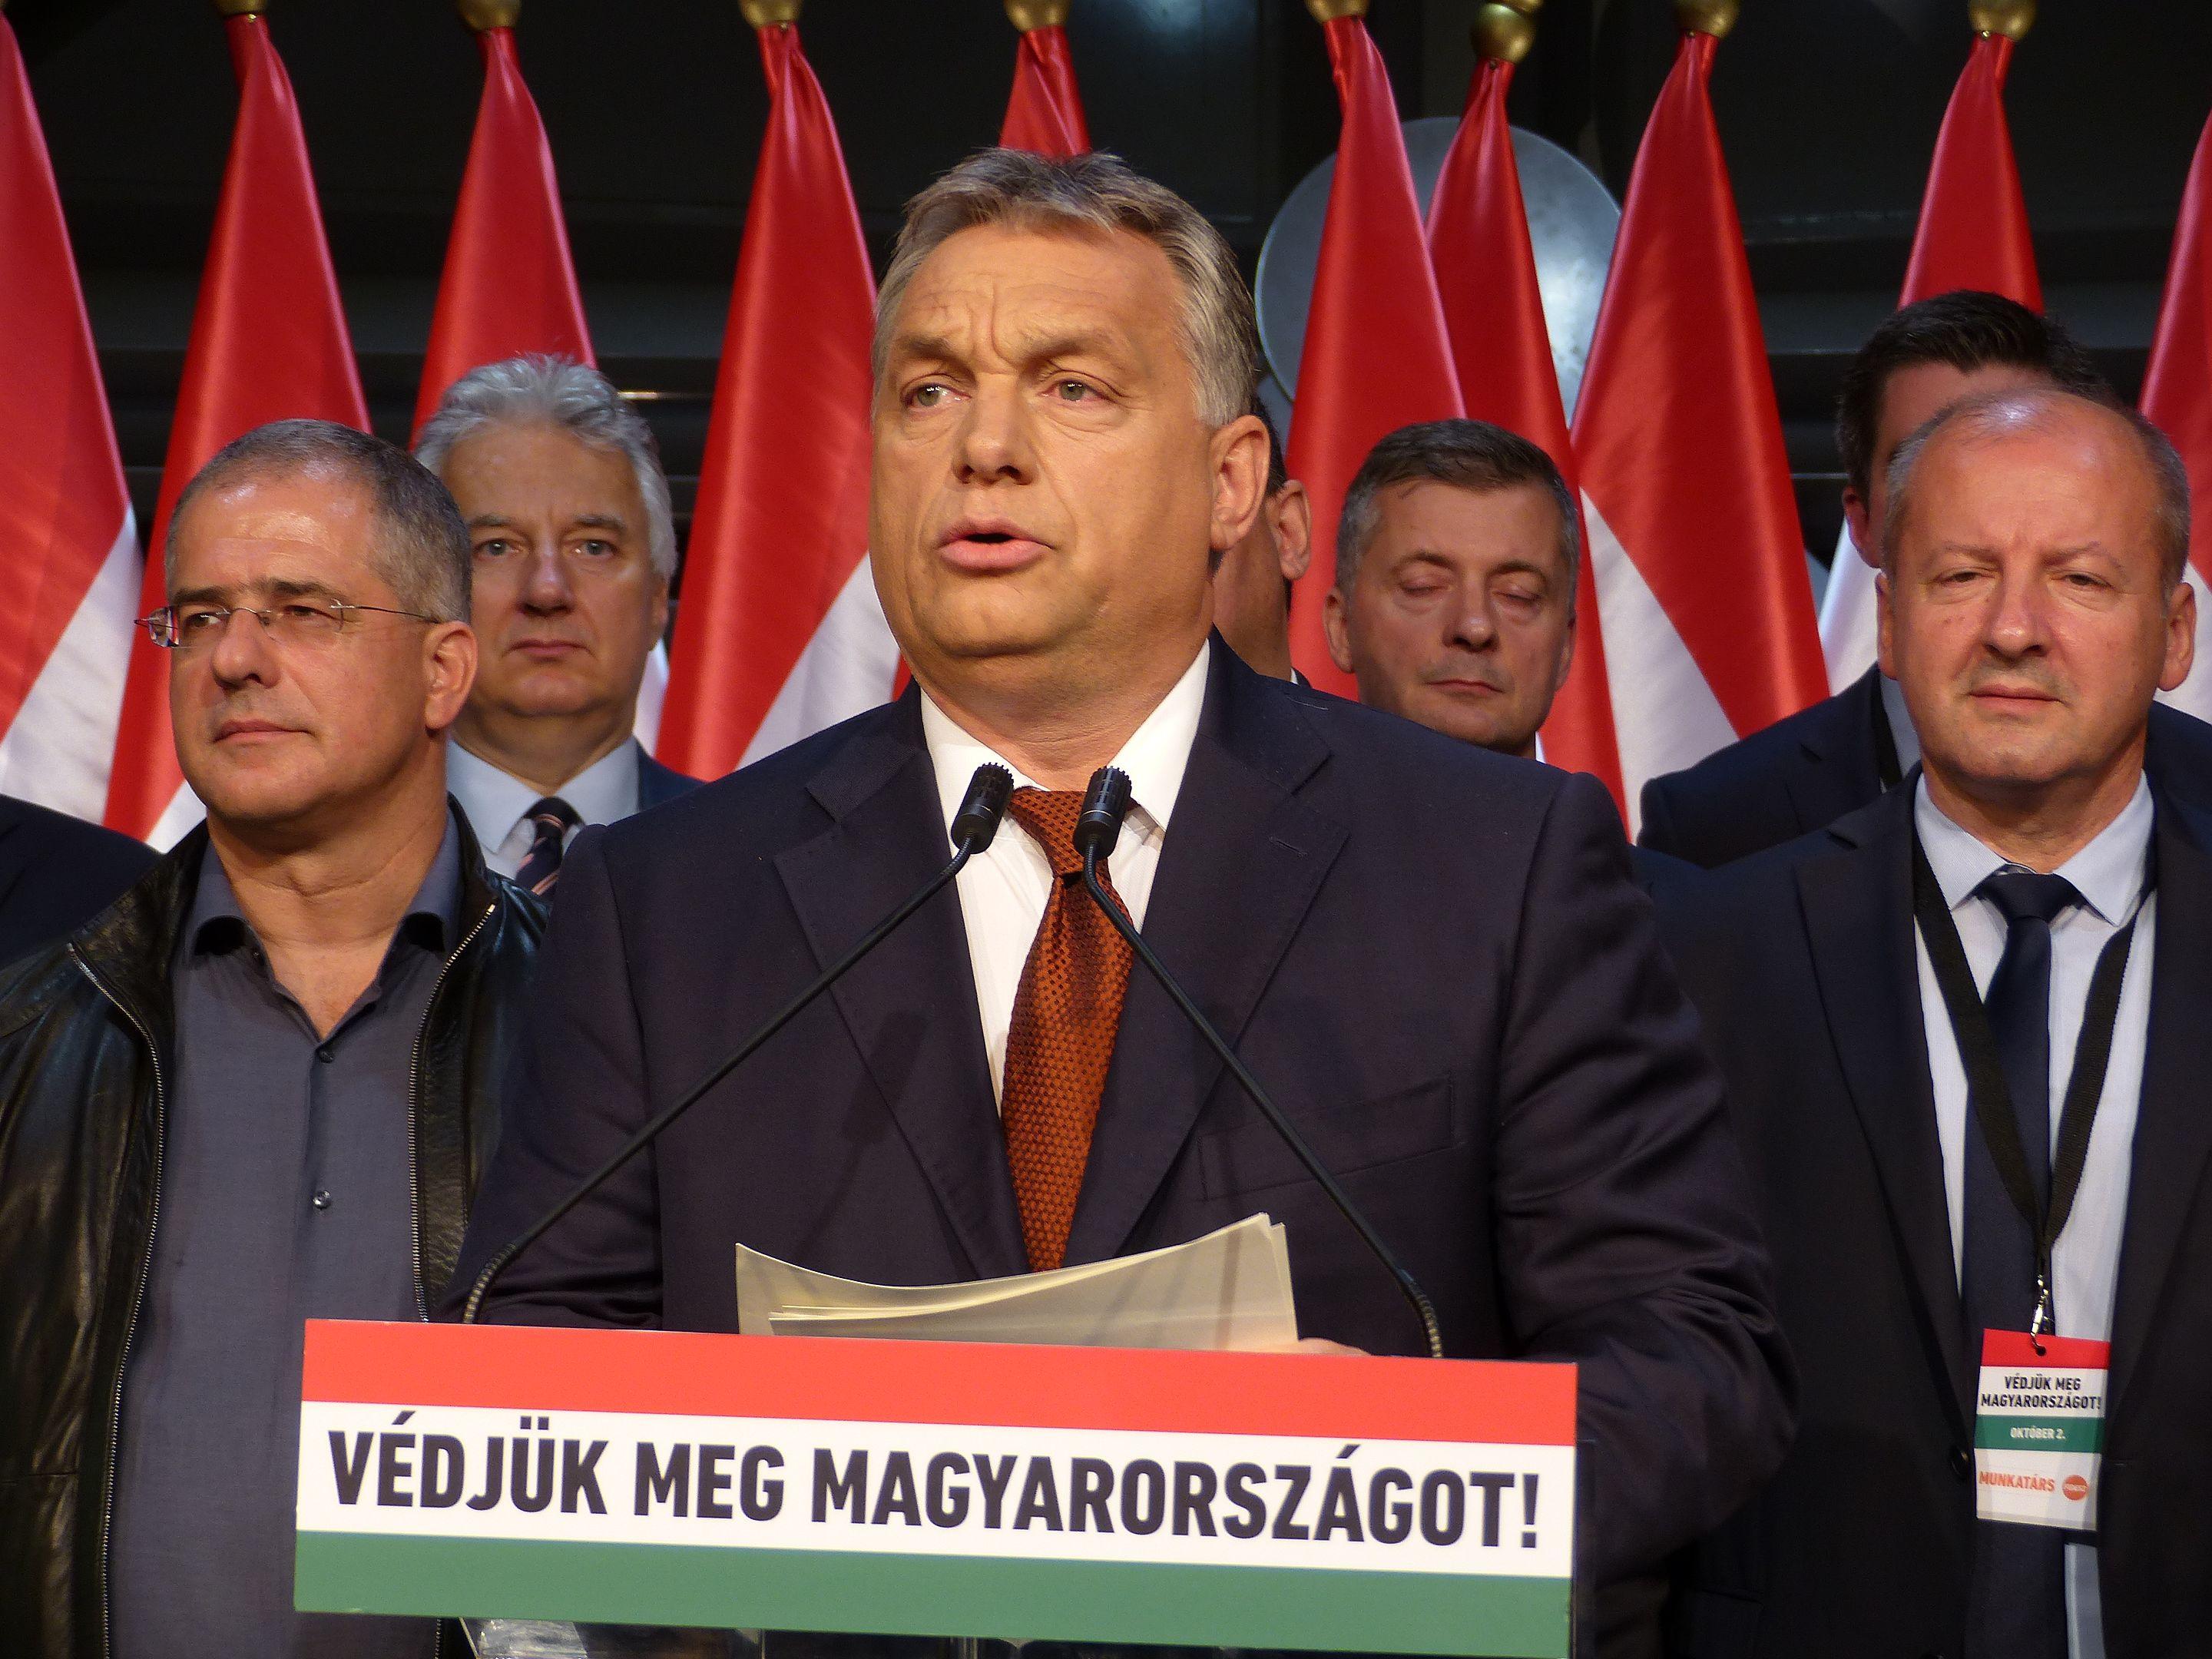 Hungary Prime Minister Viktor Orbán